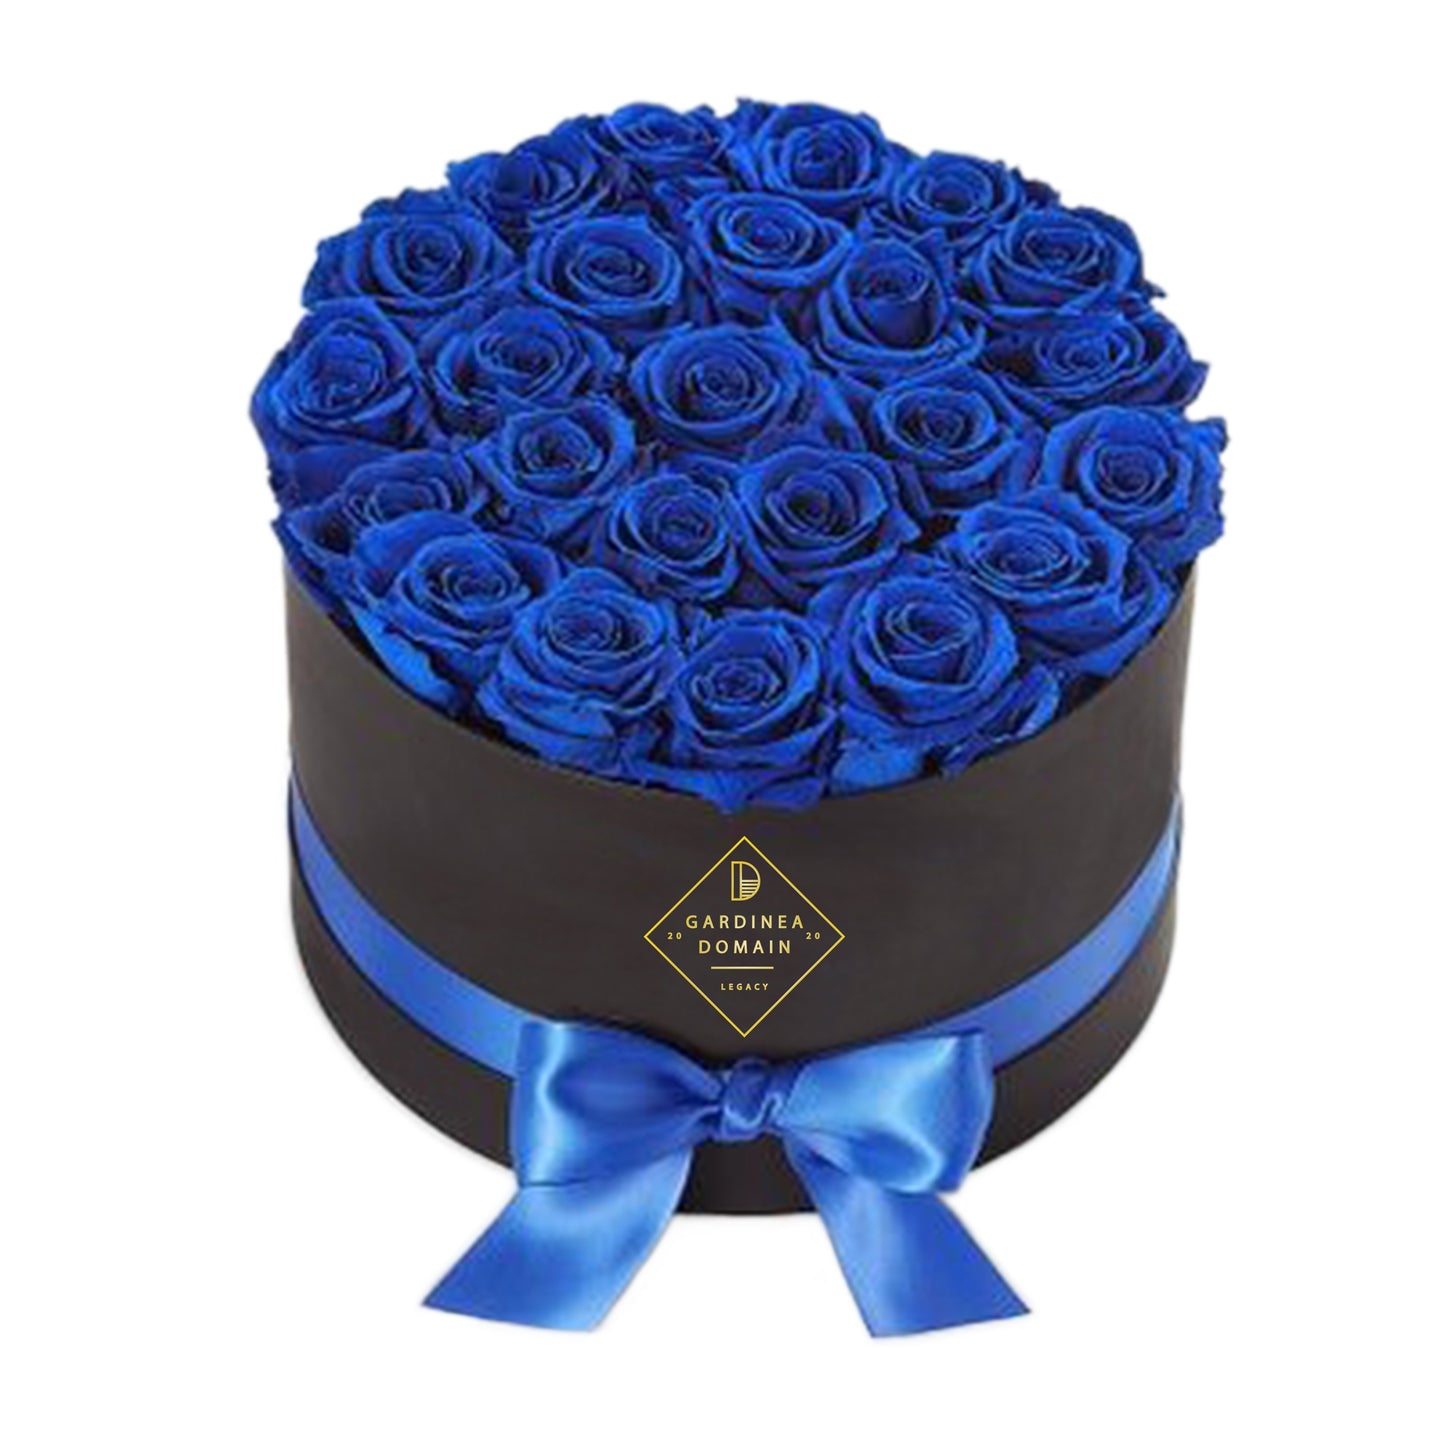 Aranjament floral Gardinea Domain® 25 trandafiri albastrii in cutie neagra cadou